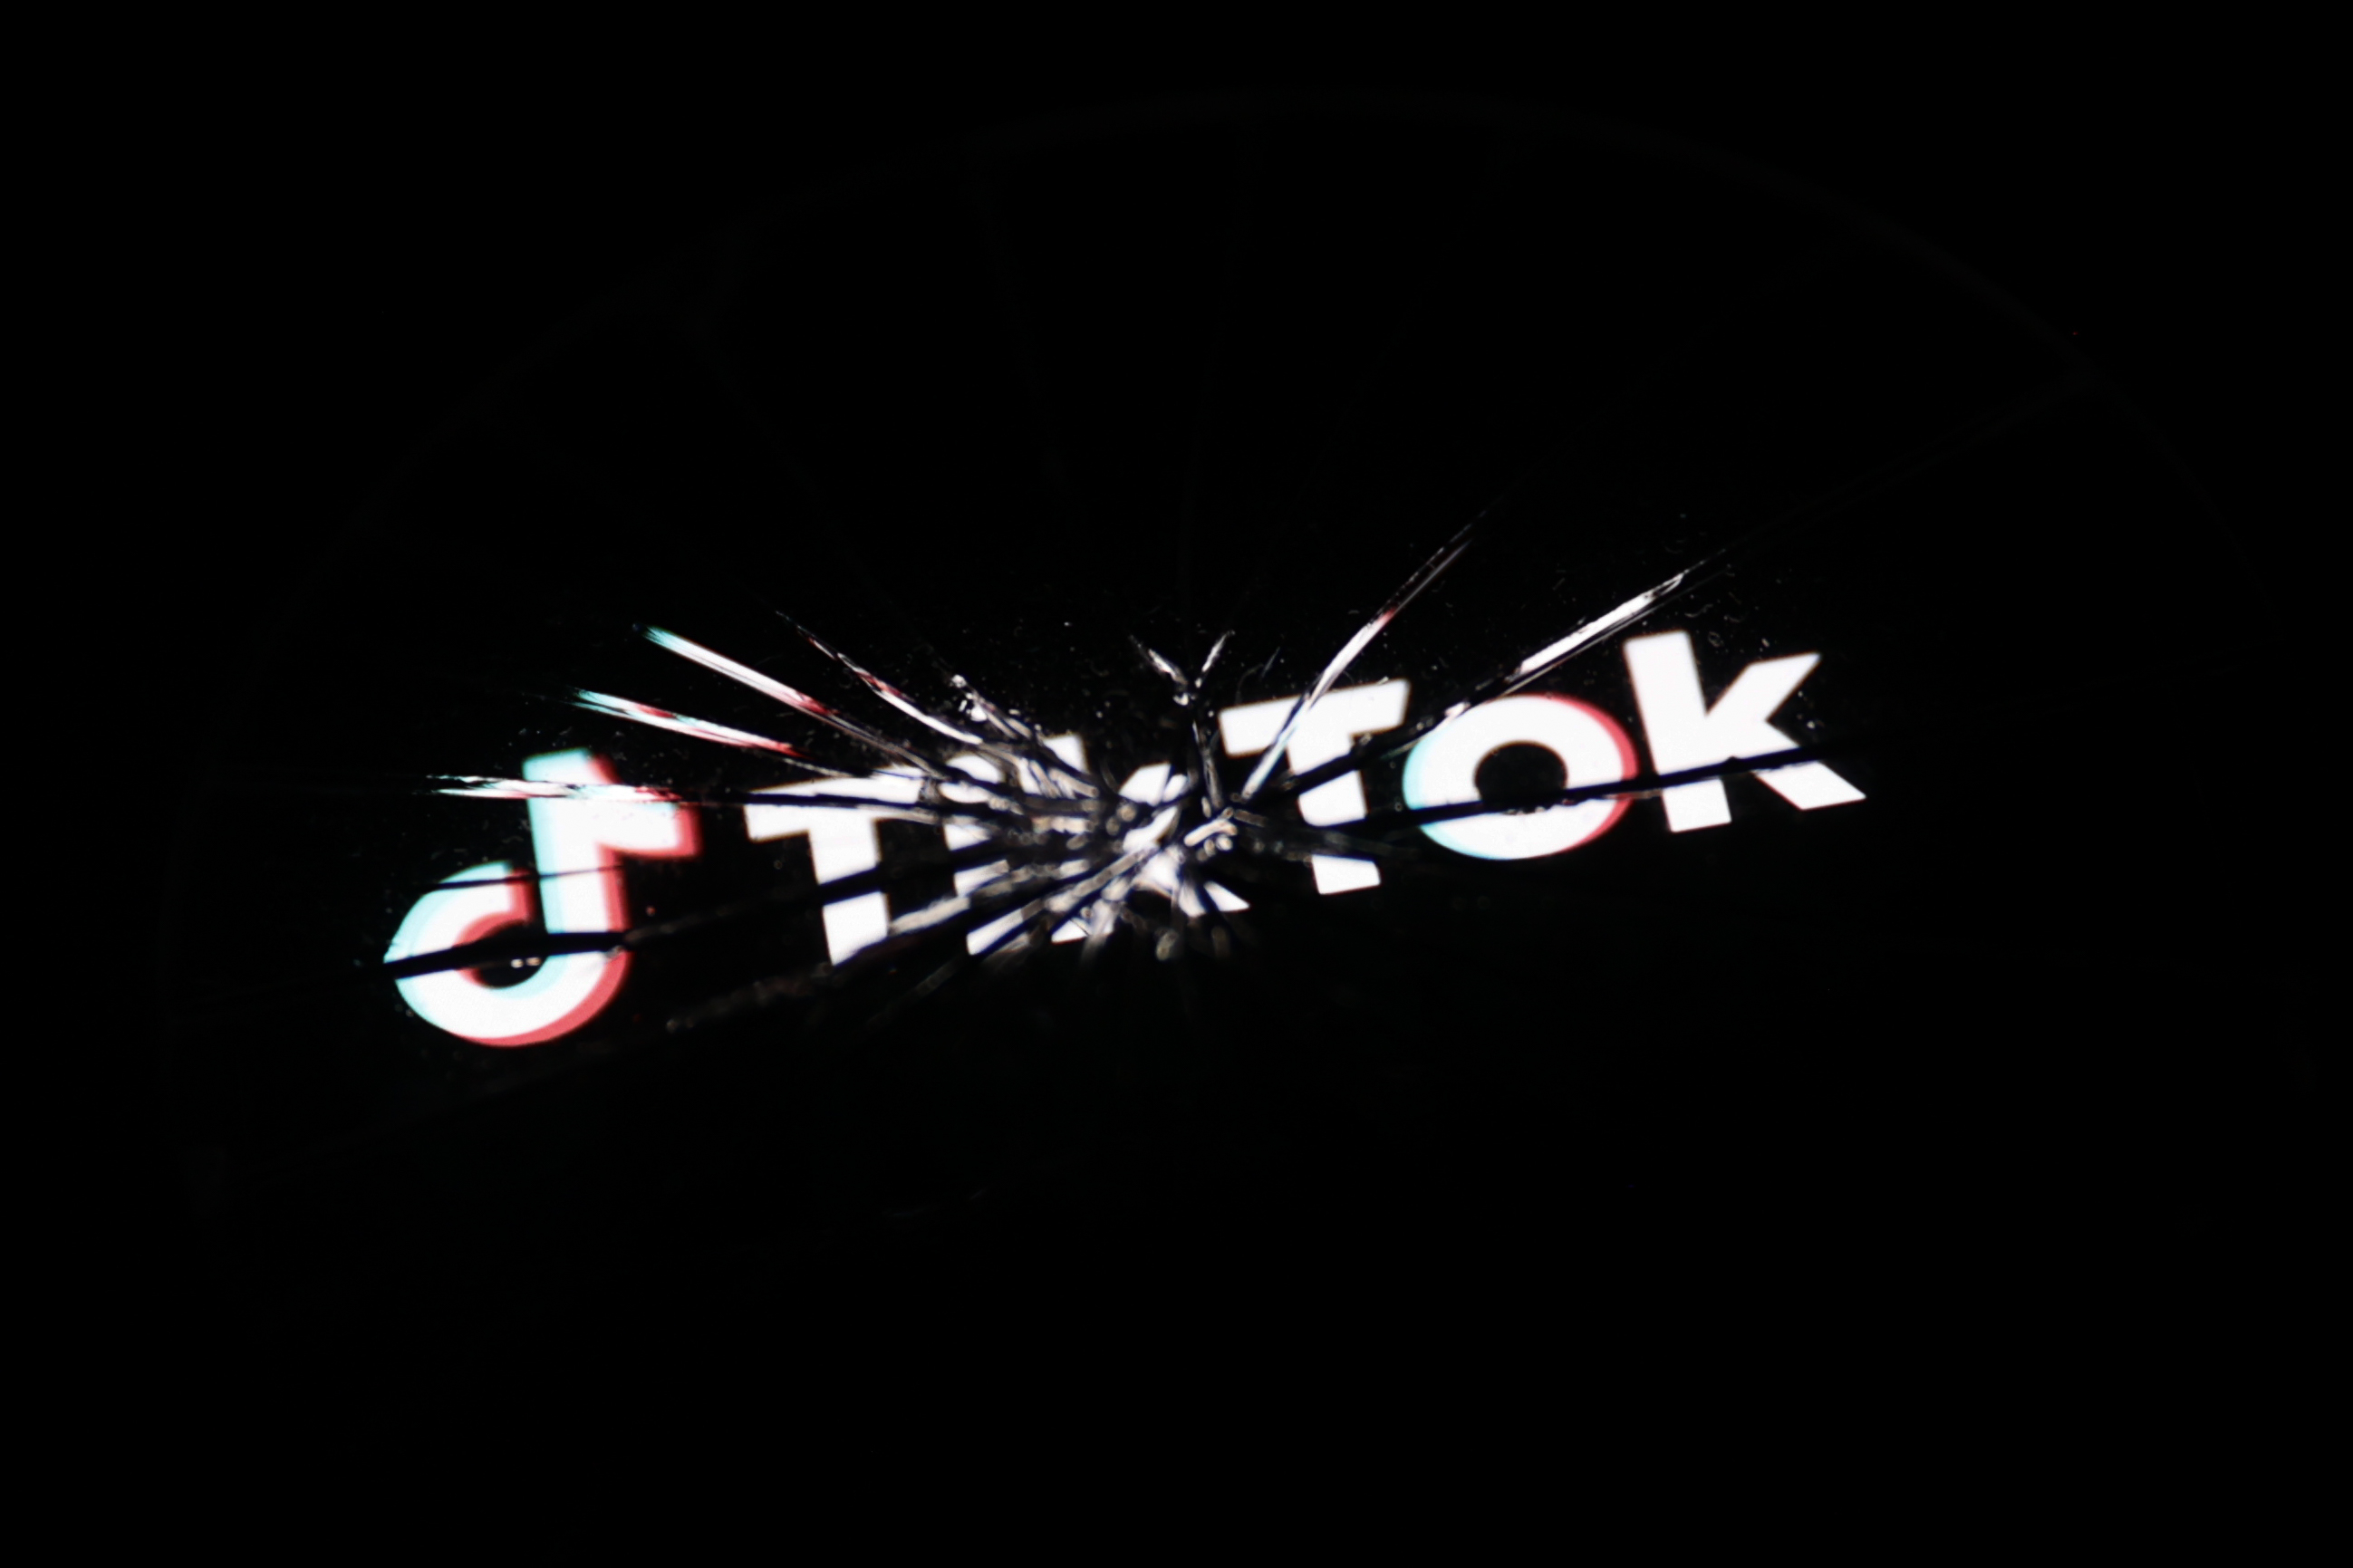 Cracked screen displaying the TikTok logo